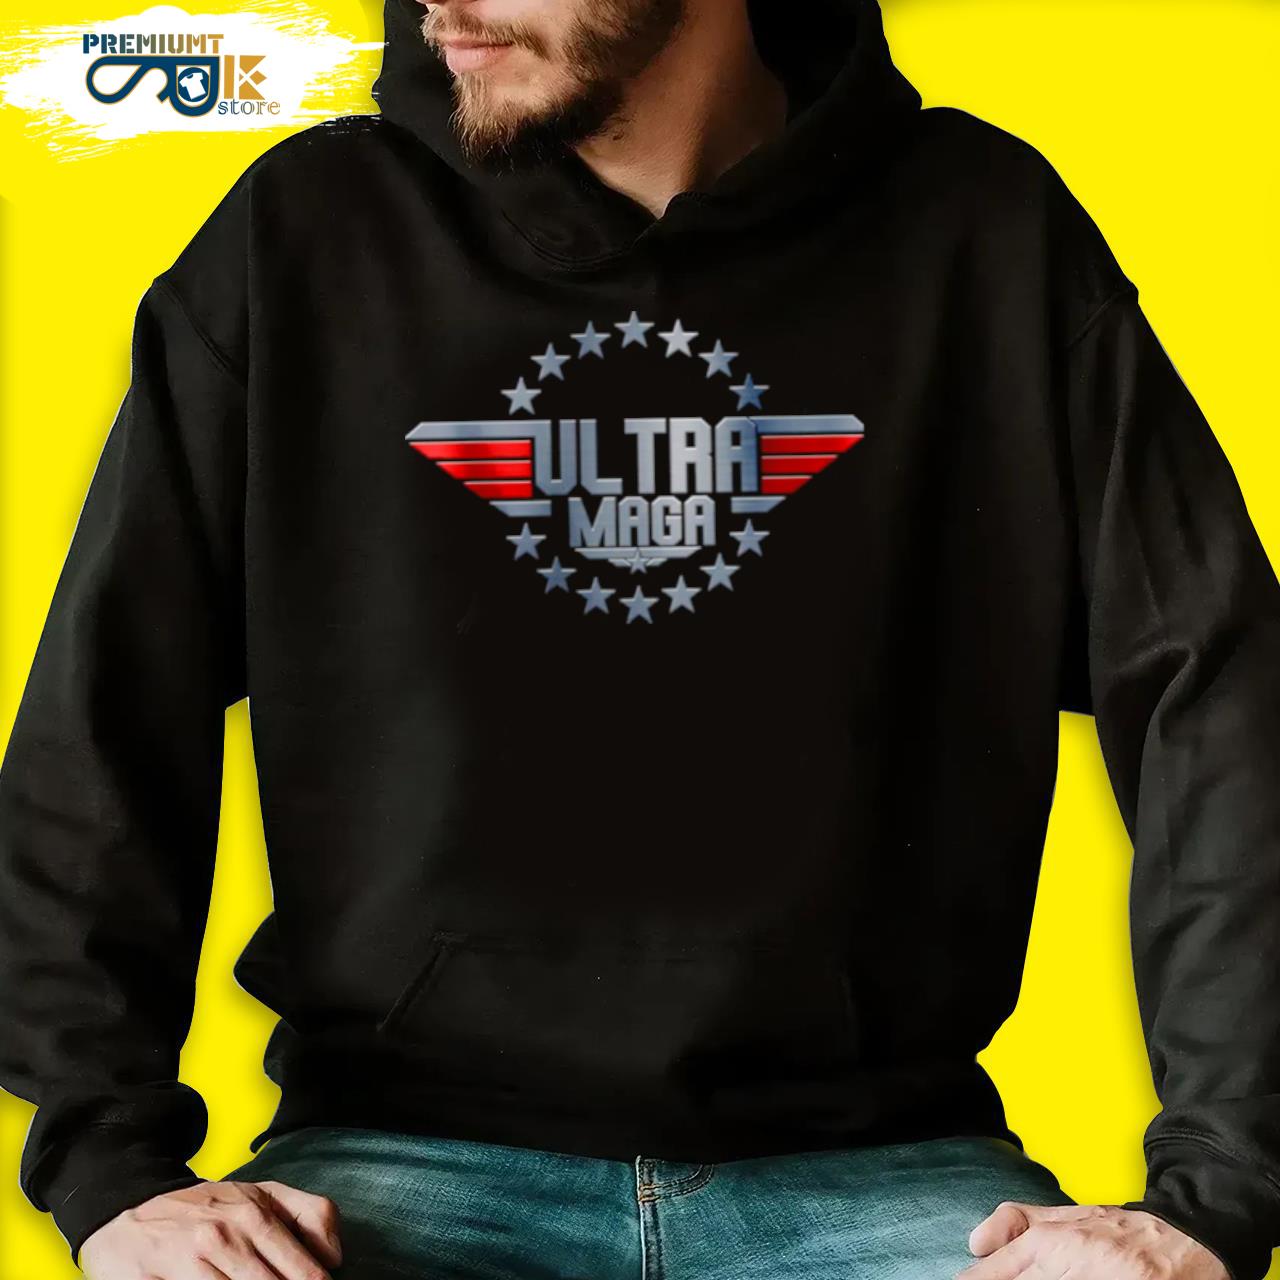 Ultra maga top gun logo s black hoodie